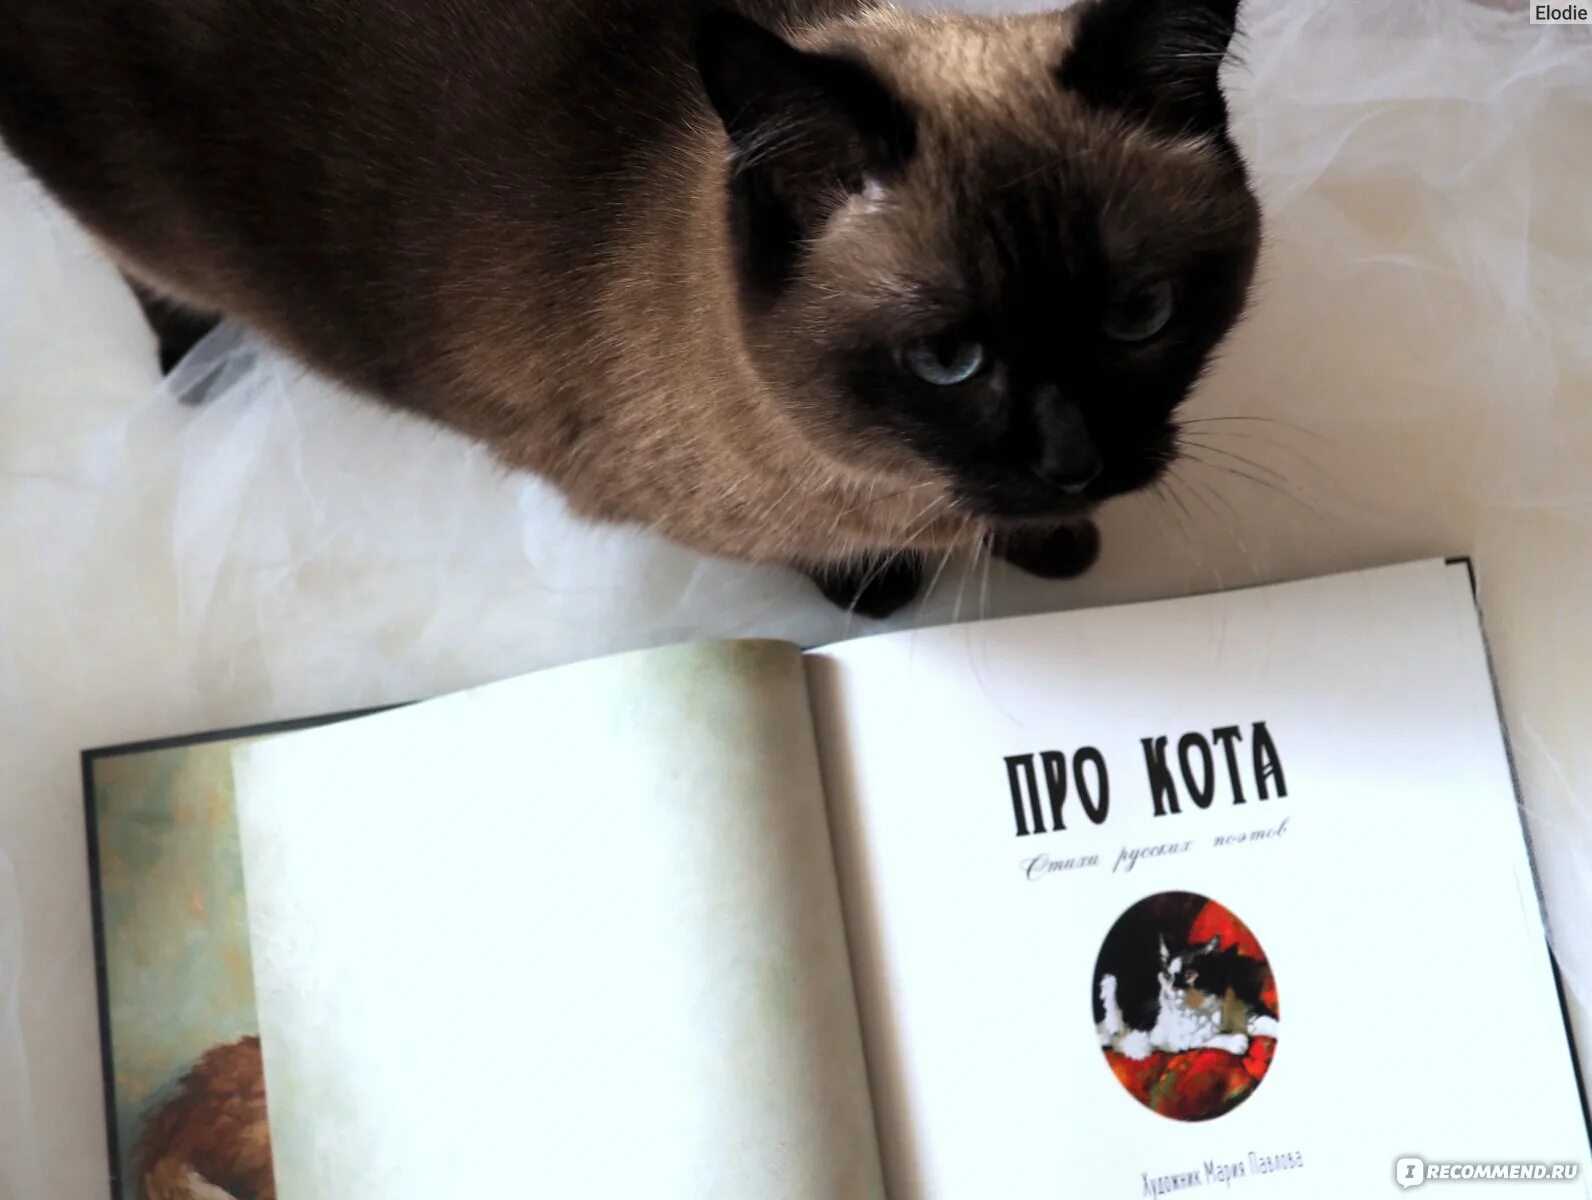 Https irecommend ru content. Поэтические с котиками. Classic кот. Чудо от кота......стих. Из жизни котов и кошек фото стихи отзывы.